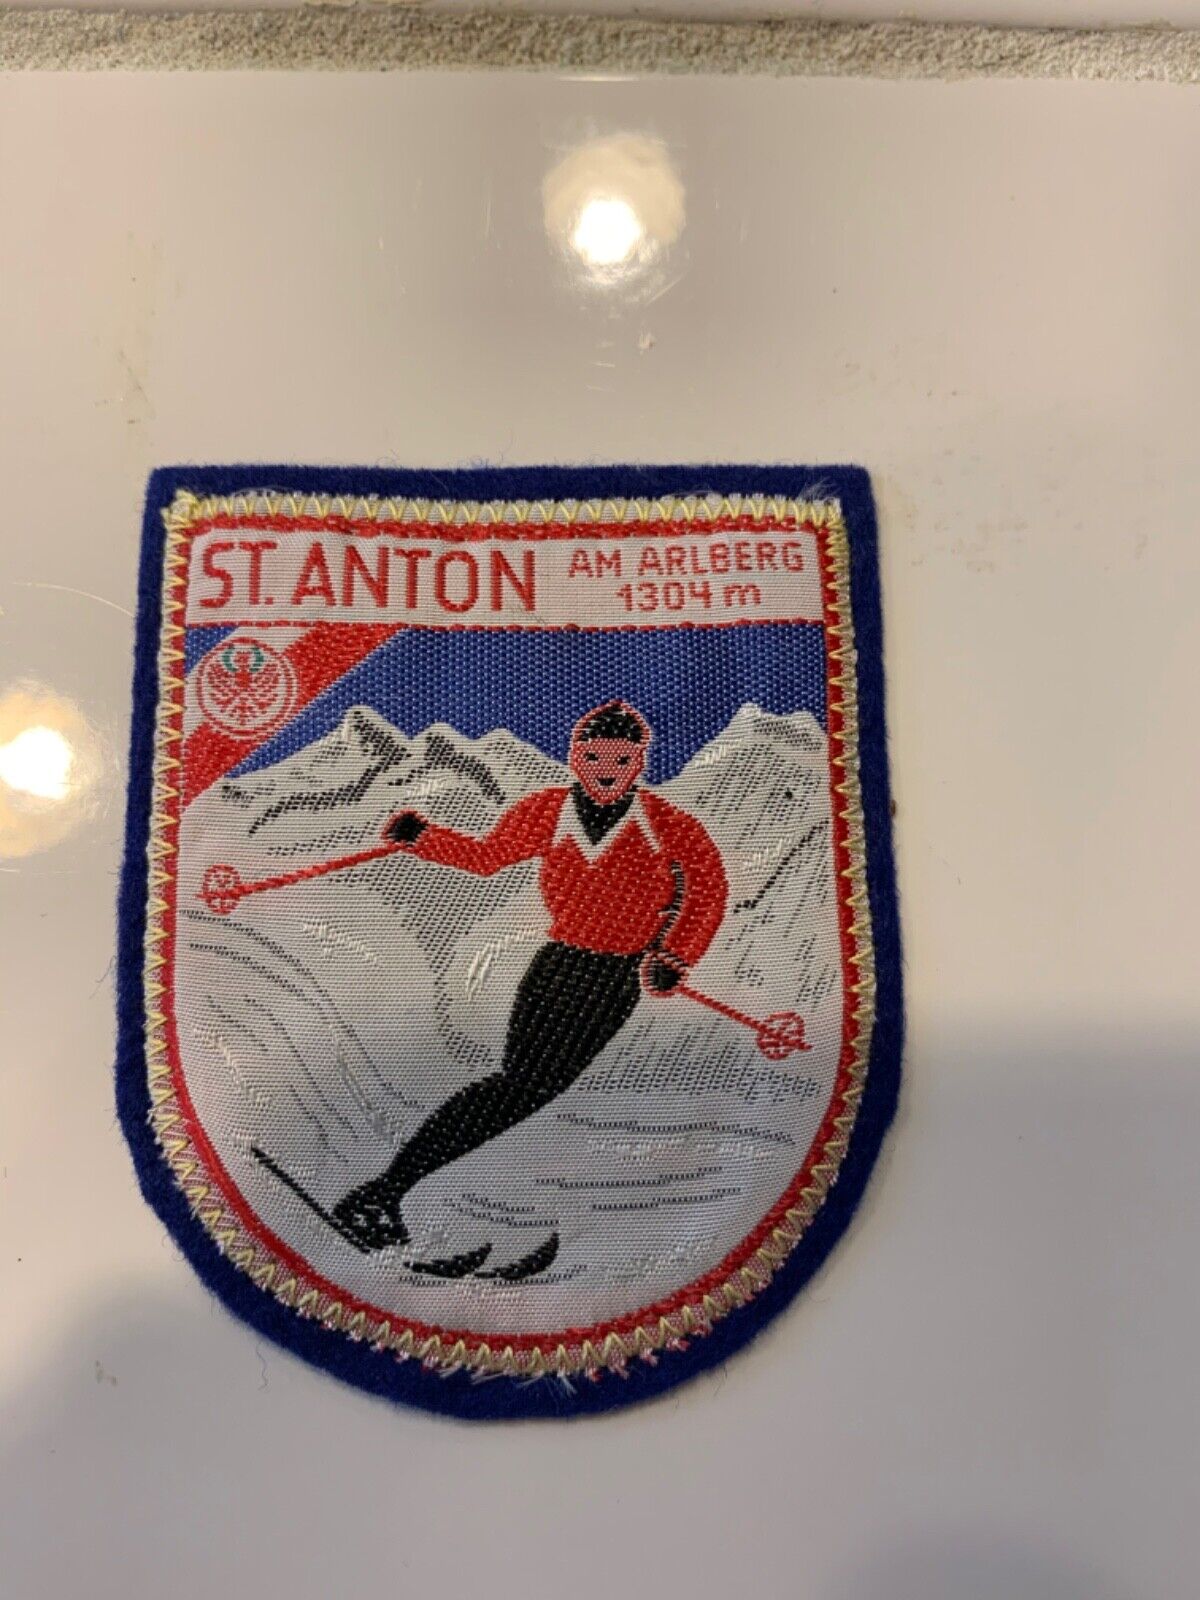 ST ANTON am Arlberg Skiing Patch Badge AUSTRIA Souvenir